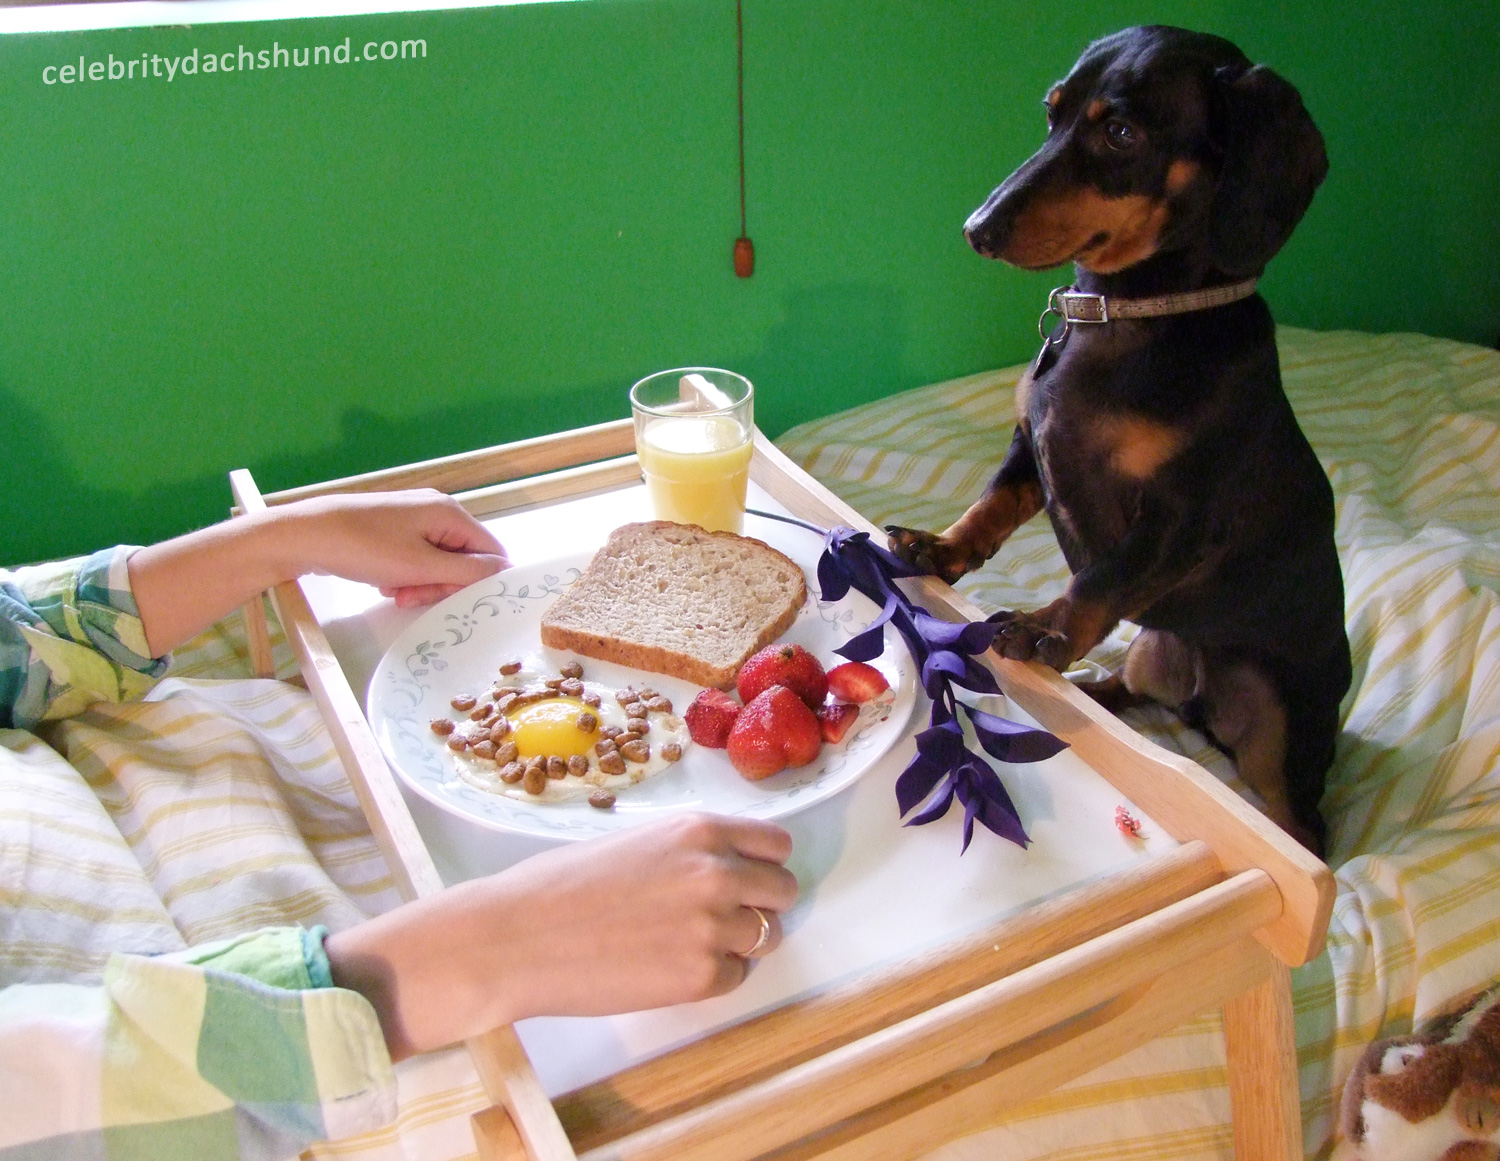 img-2180988-4-dachshund-breakfast-in-bed